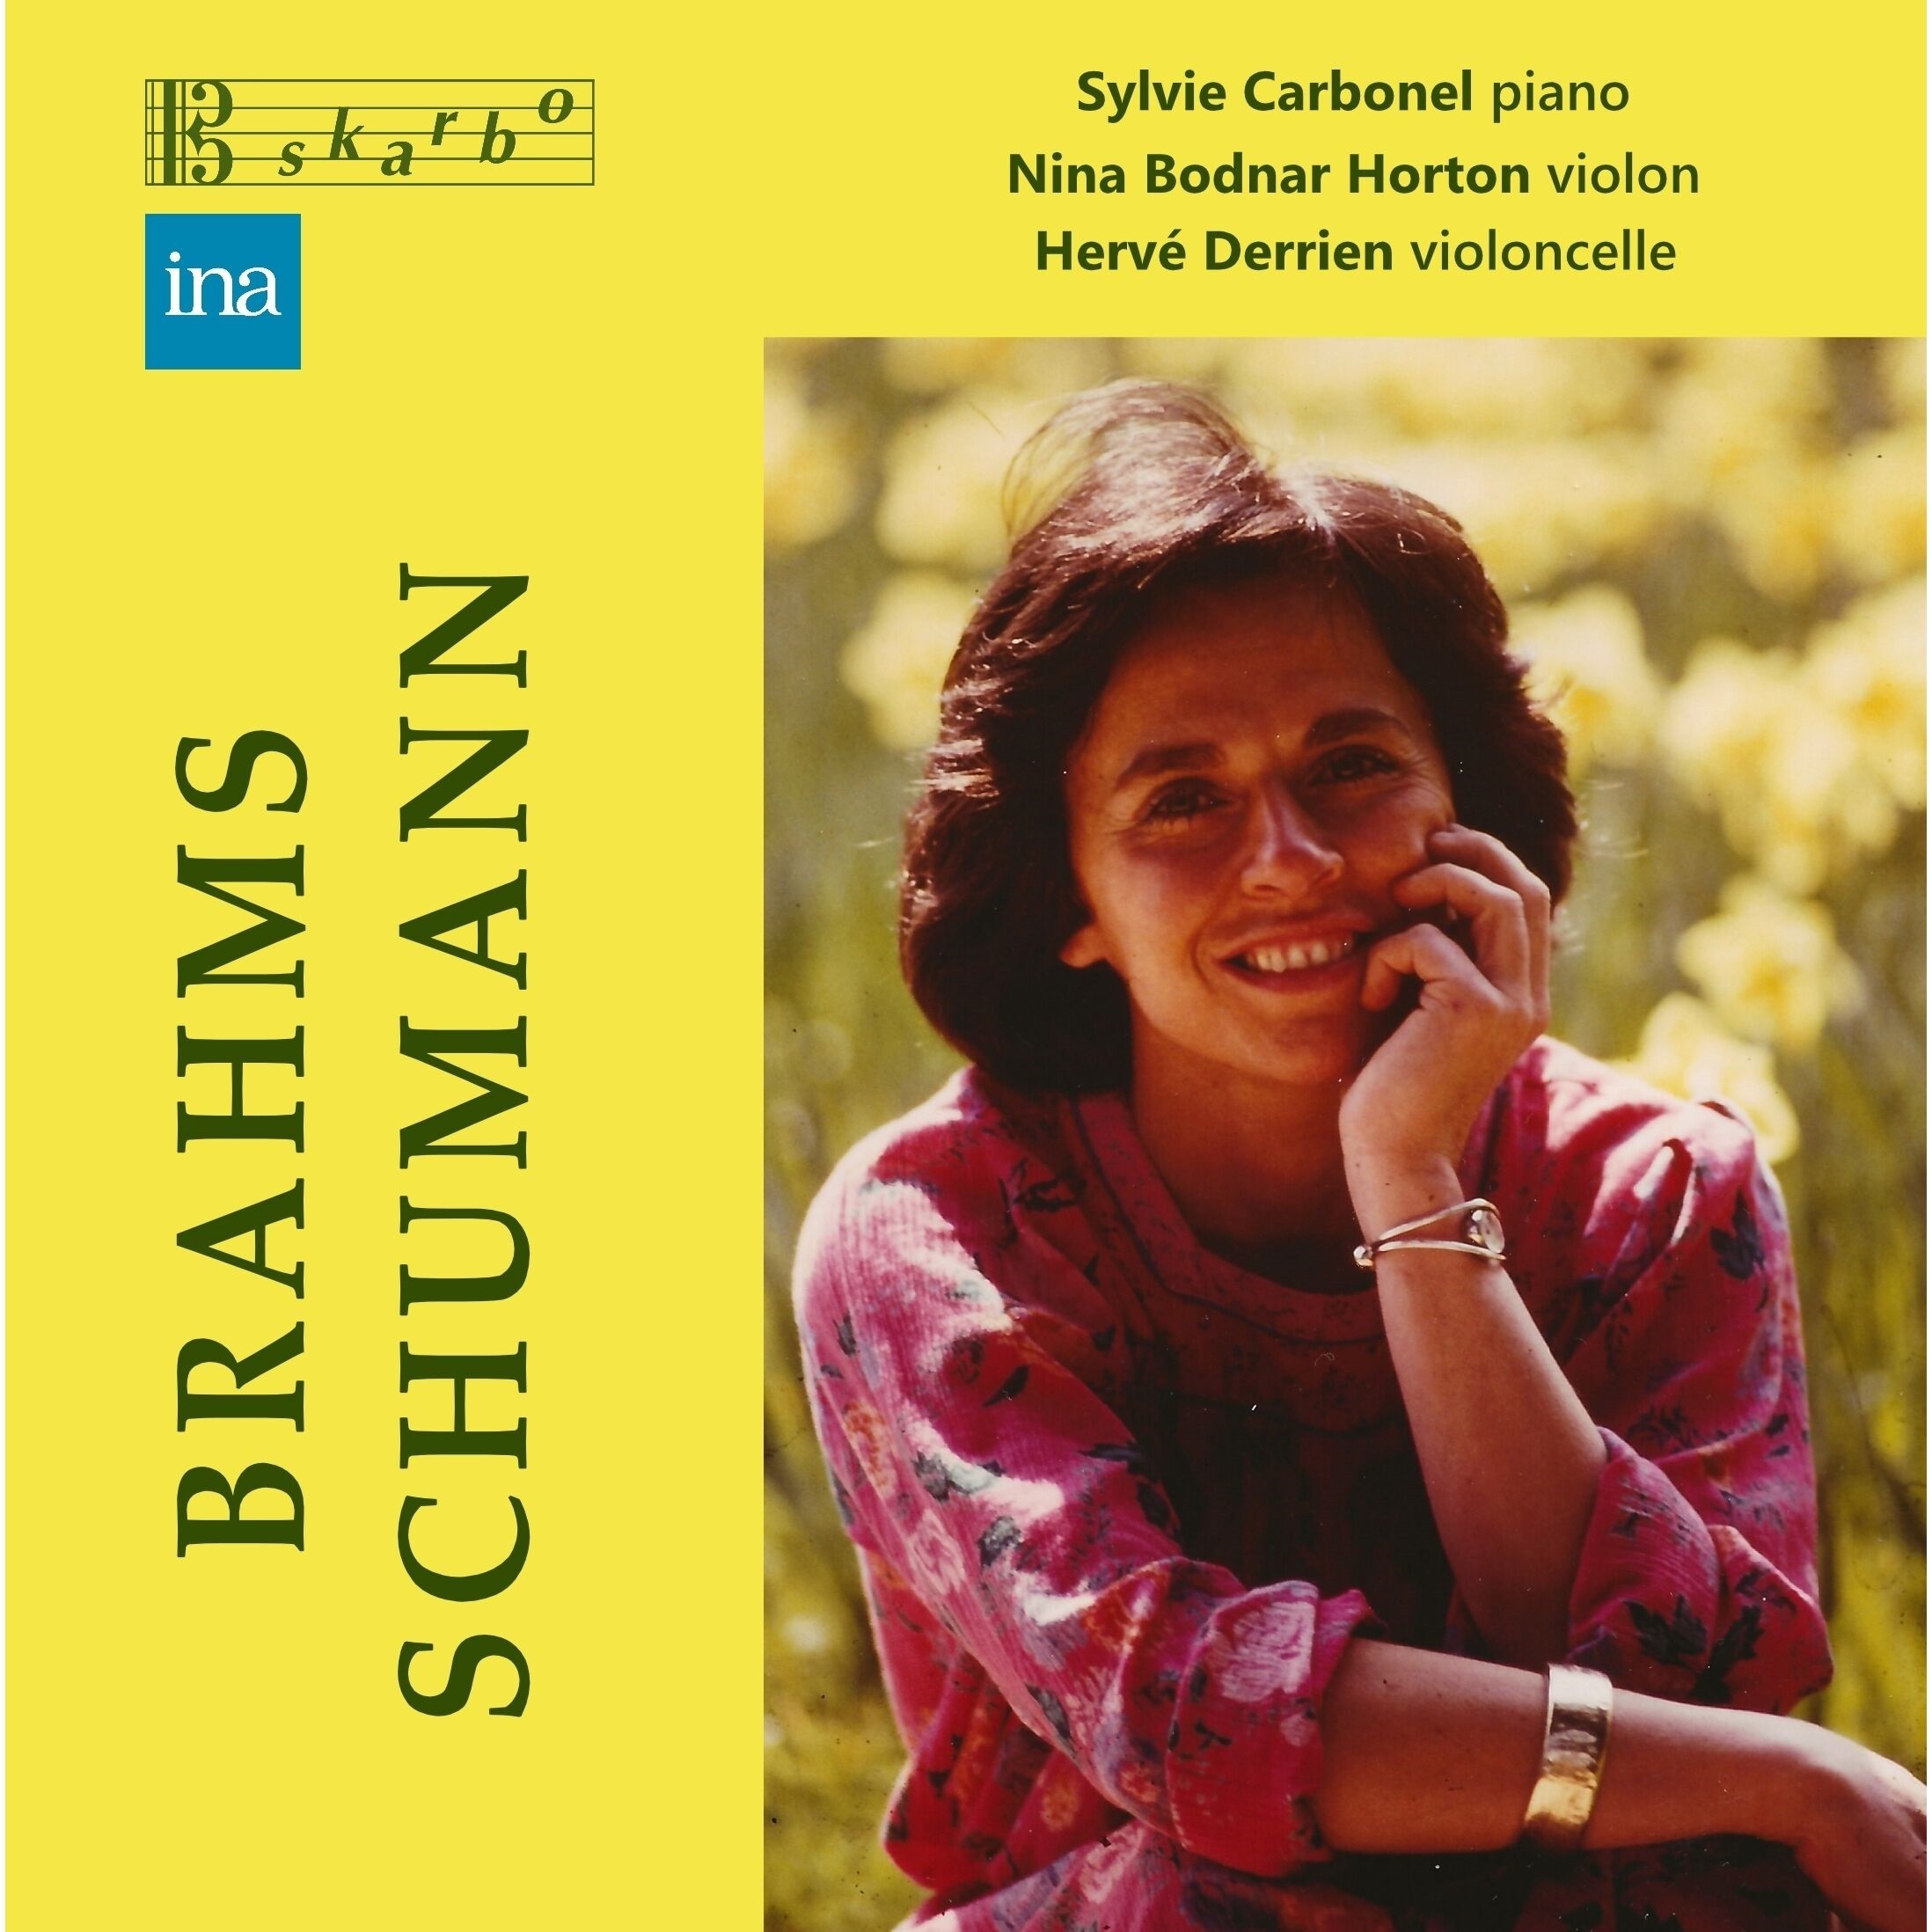 Sylvie Carbonel - Brahms: Piano Trio No. 1 in B Major, Op. 8 - Schumann: Humoreske in B-Flat Major, Op. 20 (2020) [FLAC 24bit/96kHz] Download